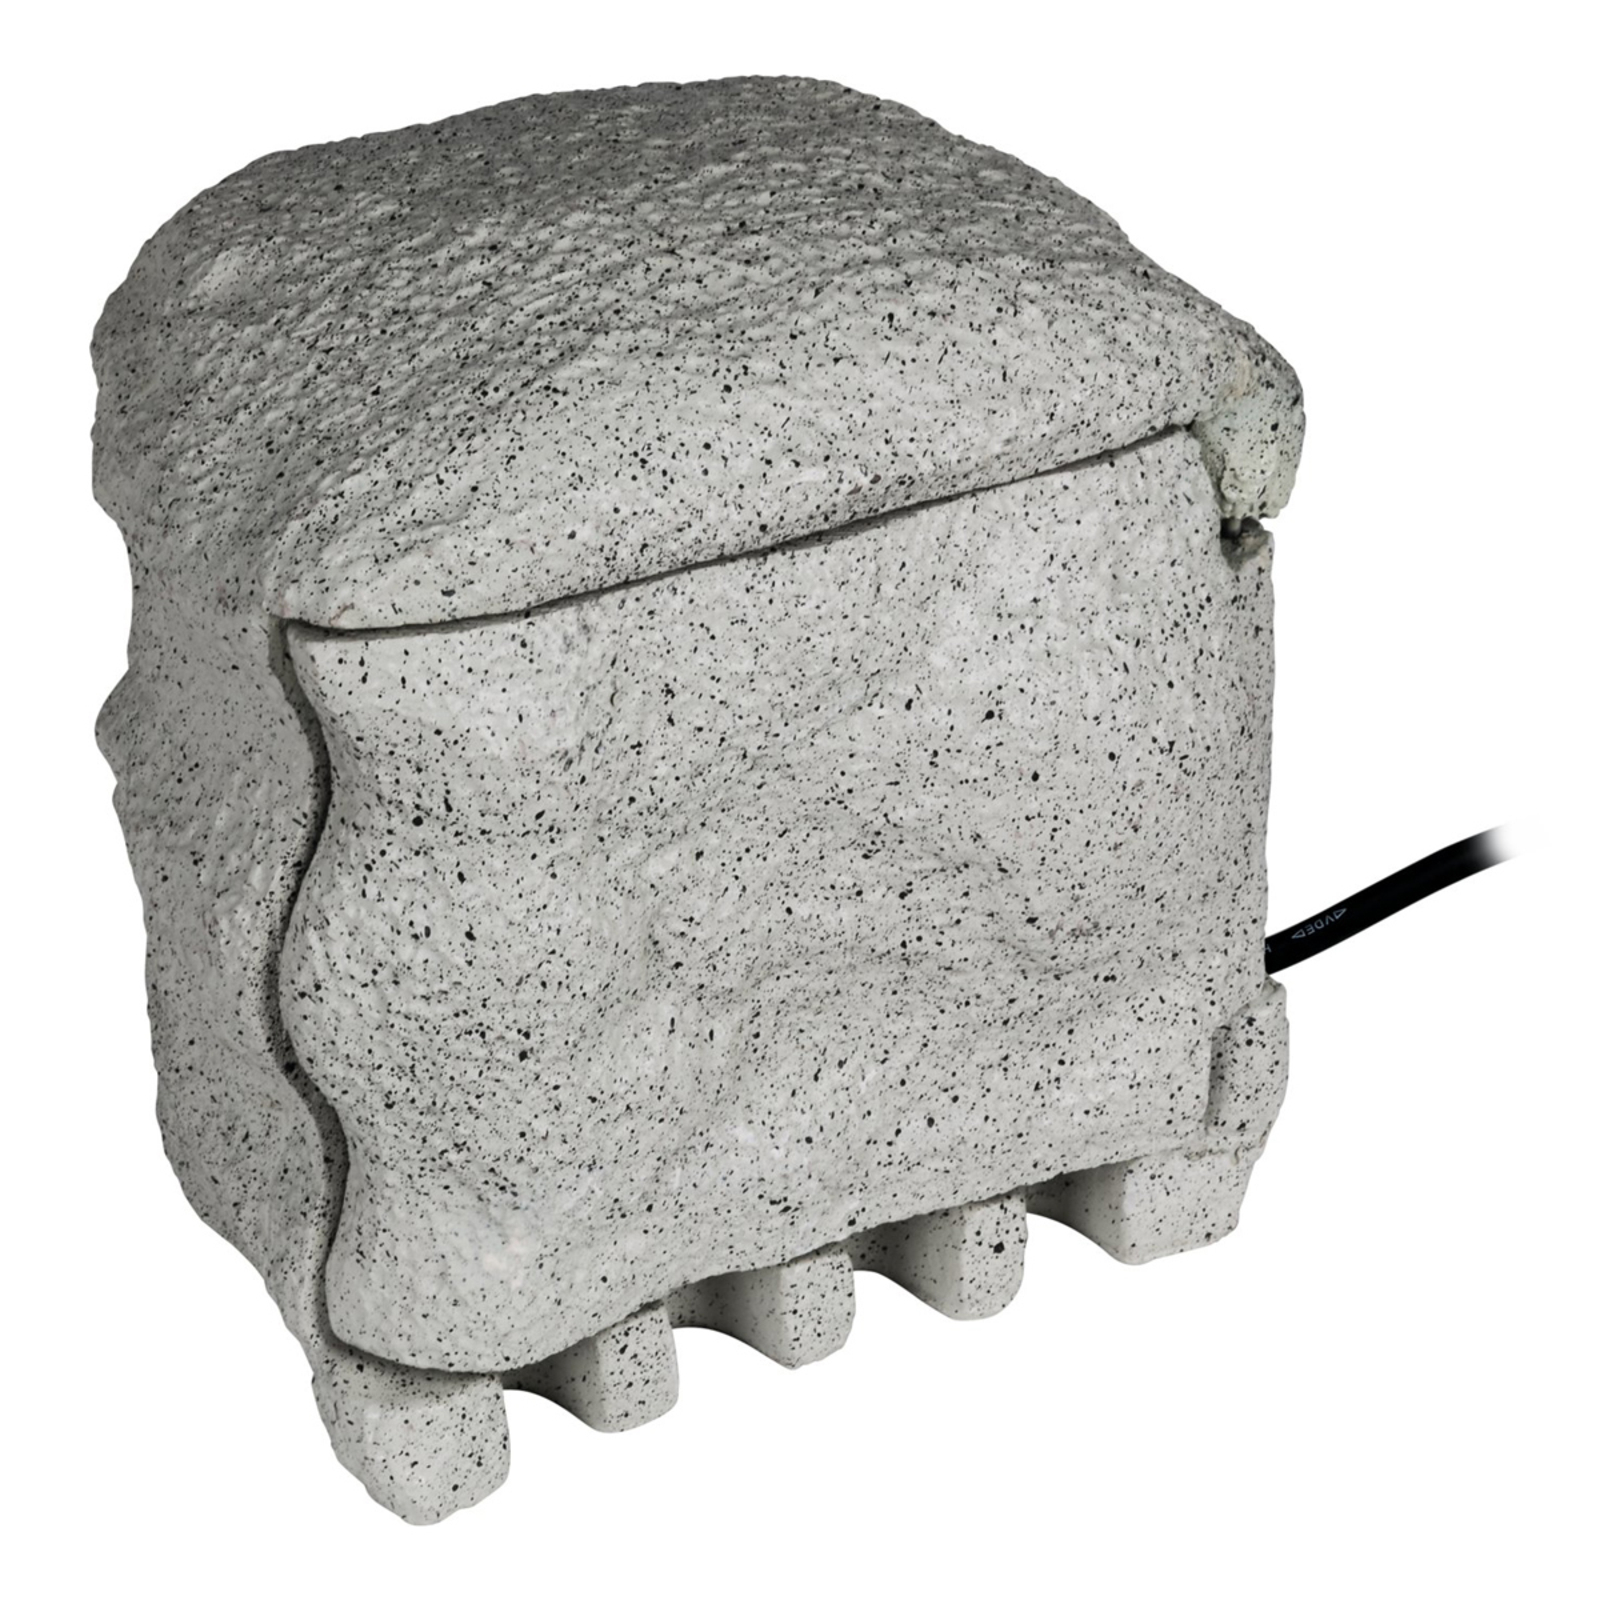 Rozdeľovač energie Piedra vzhľad granit exteriér